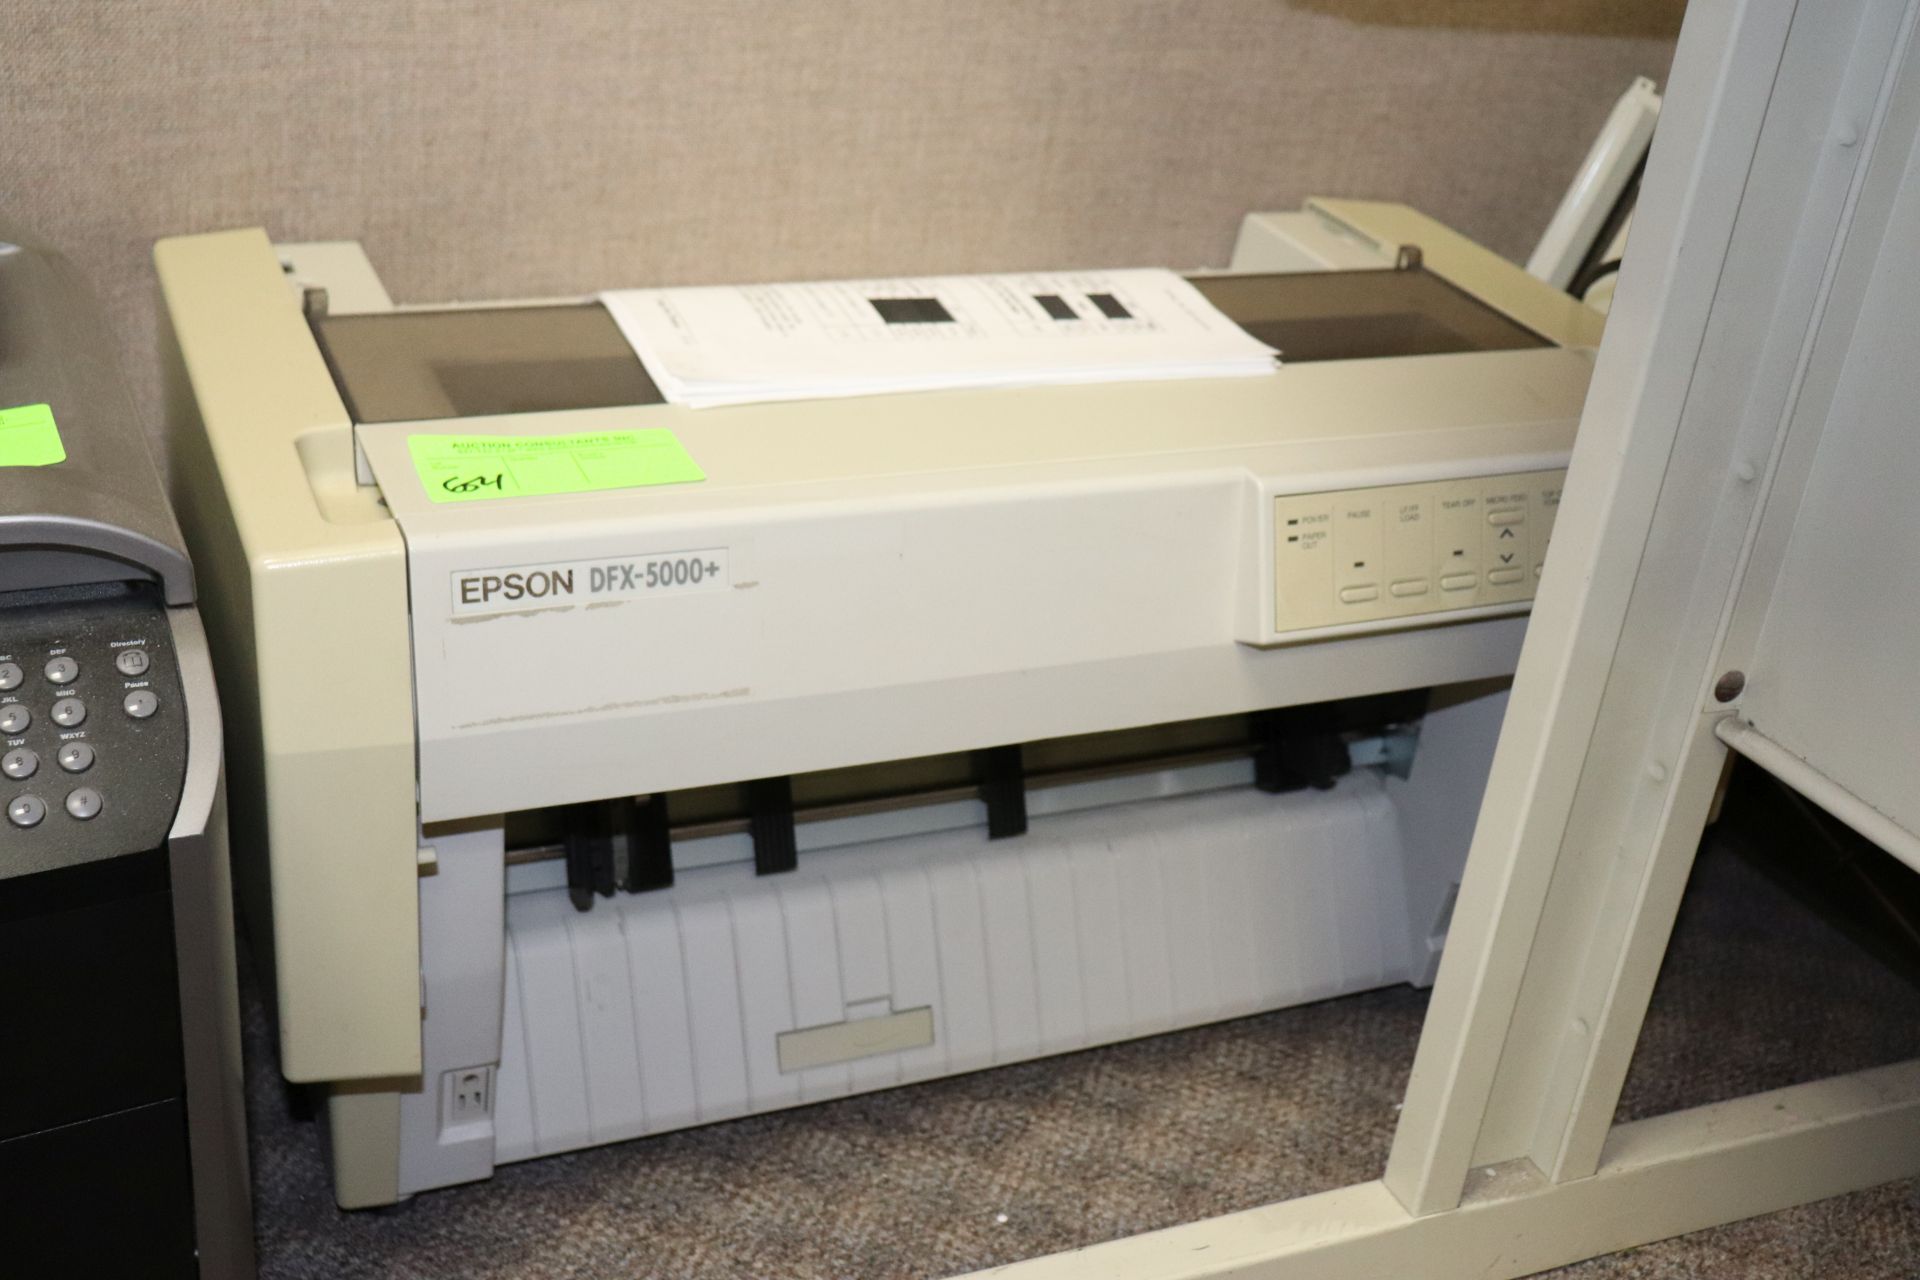 Epson DFX5000 printer - Image 3 of 4